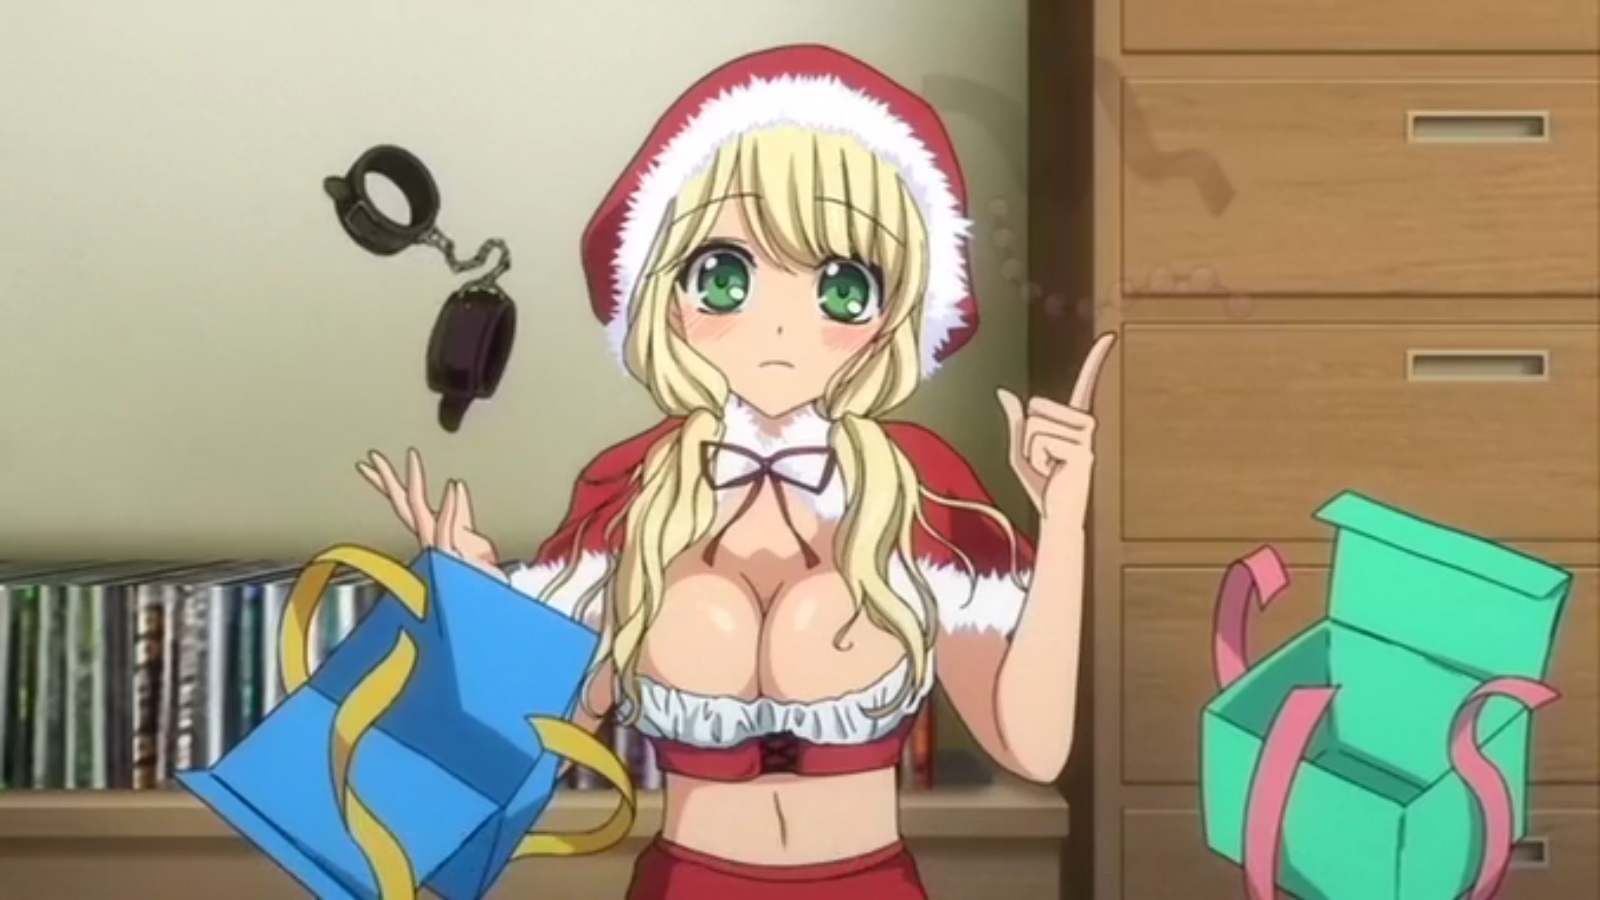 Big Tit Blonde Anime Girl Hentai - Big Tits Blonde Anime Miss Santa Porn | WatchAnime.video